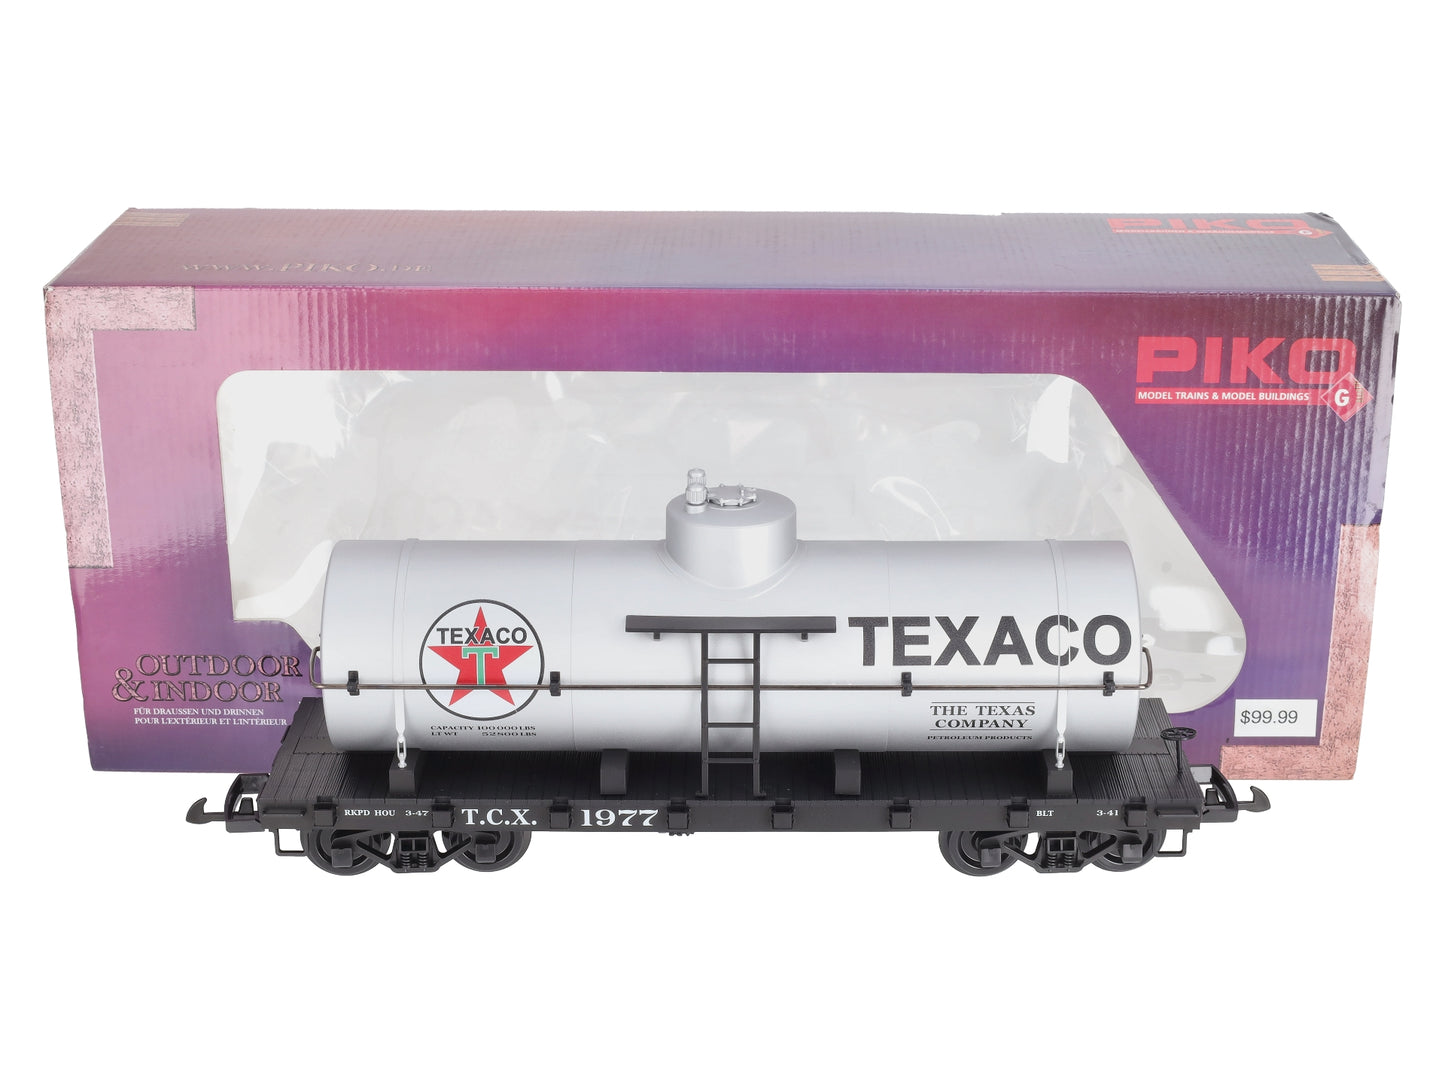 Piko 38728 G Scale Texaco Tank Car #1977 EX/Box